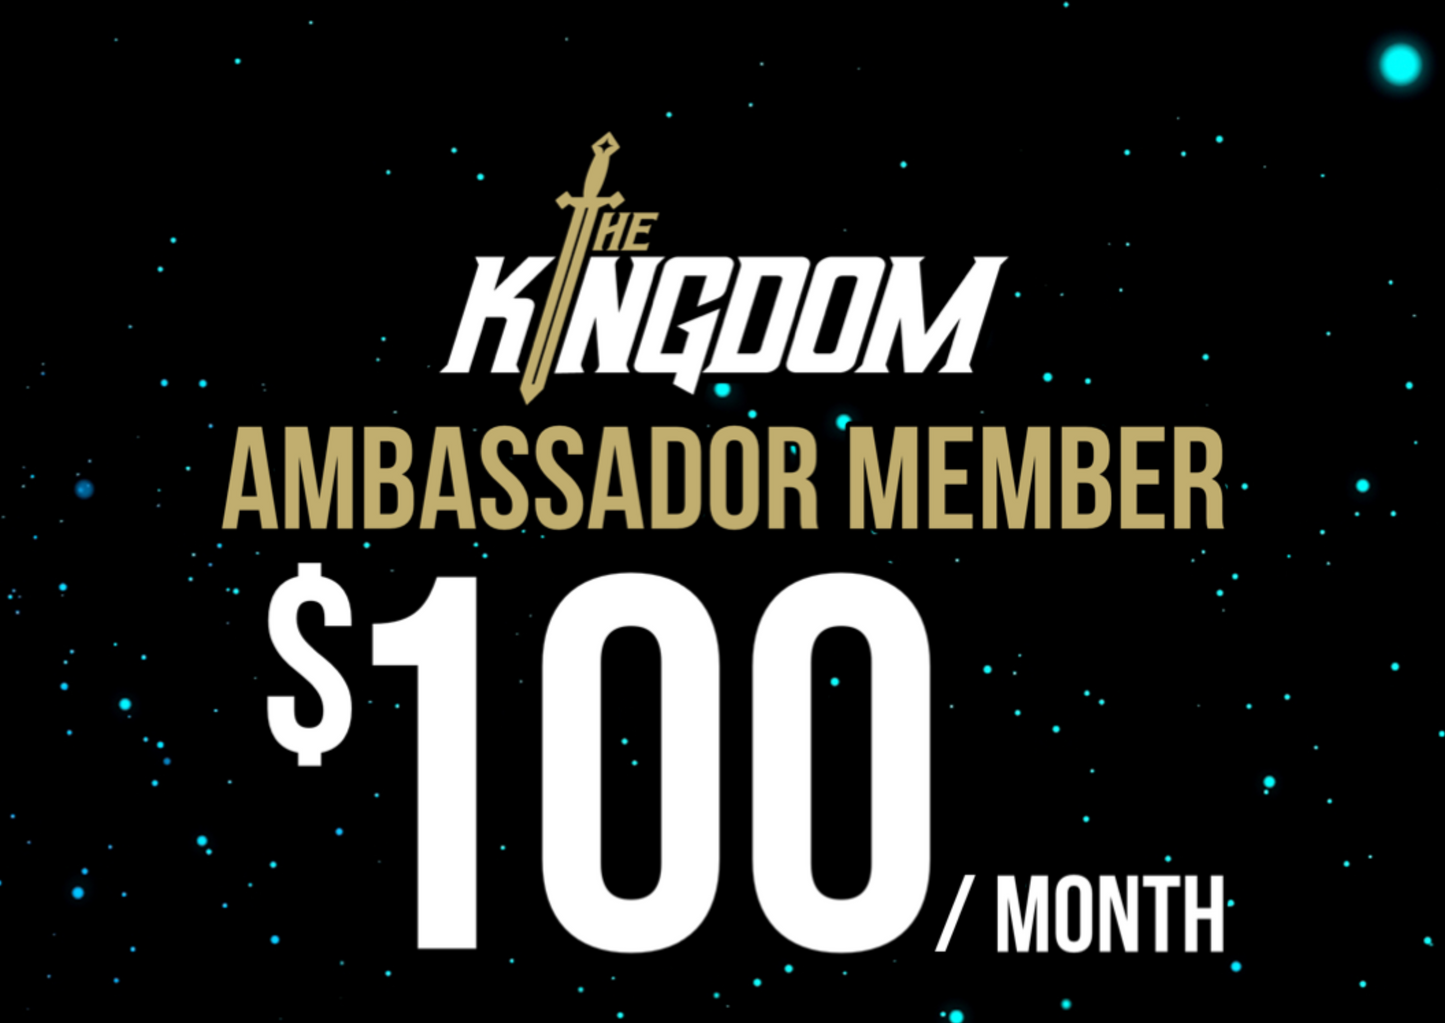 Kingdom Ambassador Member: $100 per month